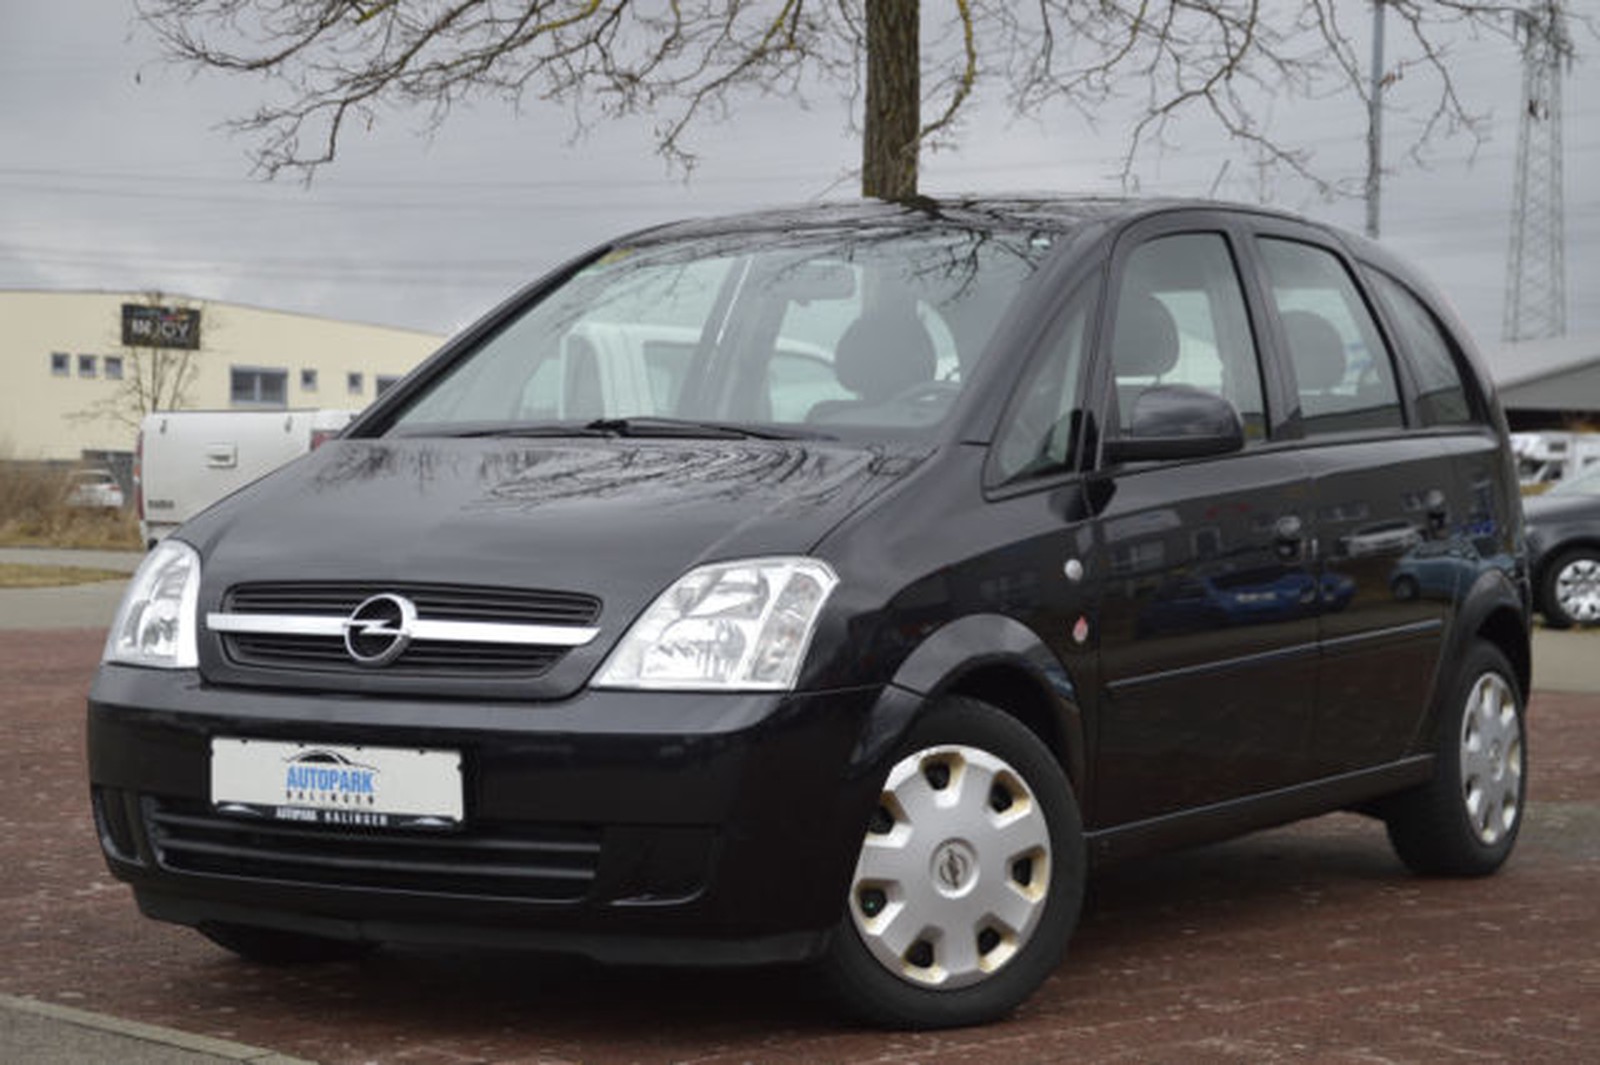 Opel Meriva gebraucht kaufen in Balingen Preis 1990 eur - Int.Nr.: 200  VERKAUFT